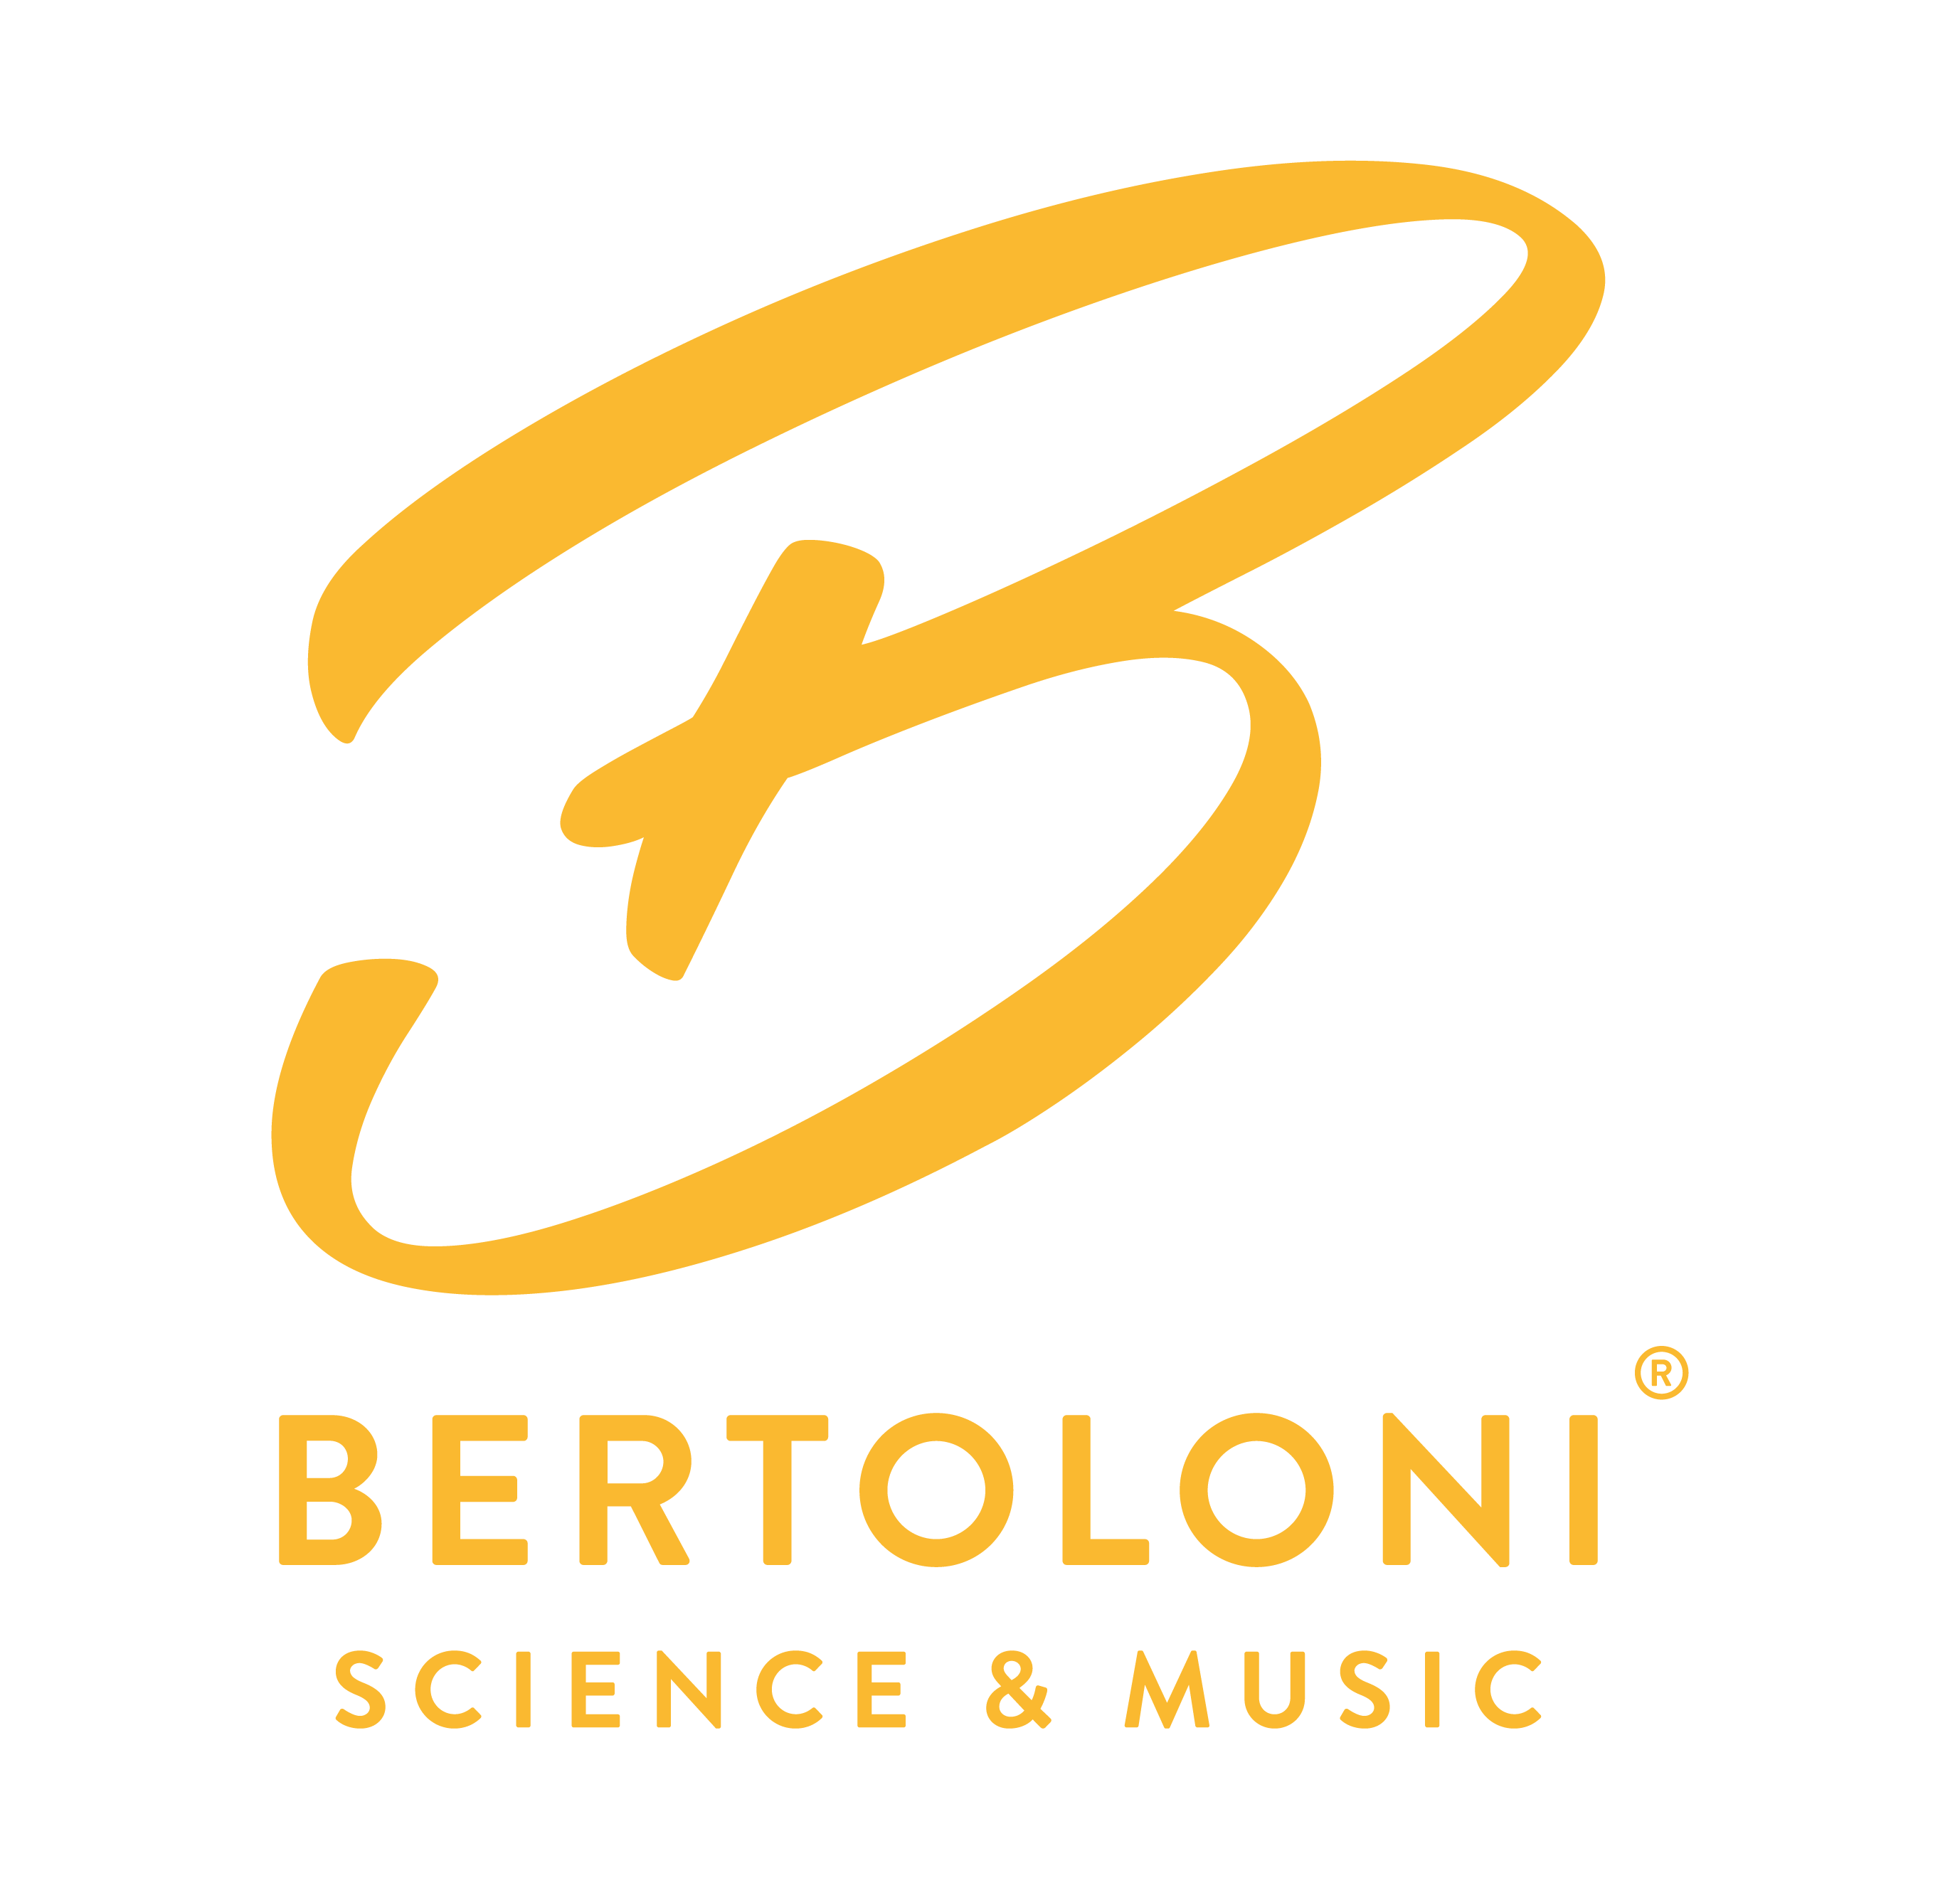 Bertoloni Science & Music